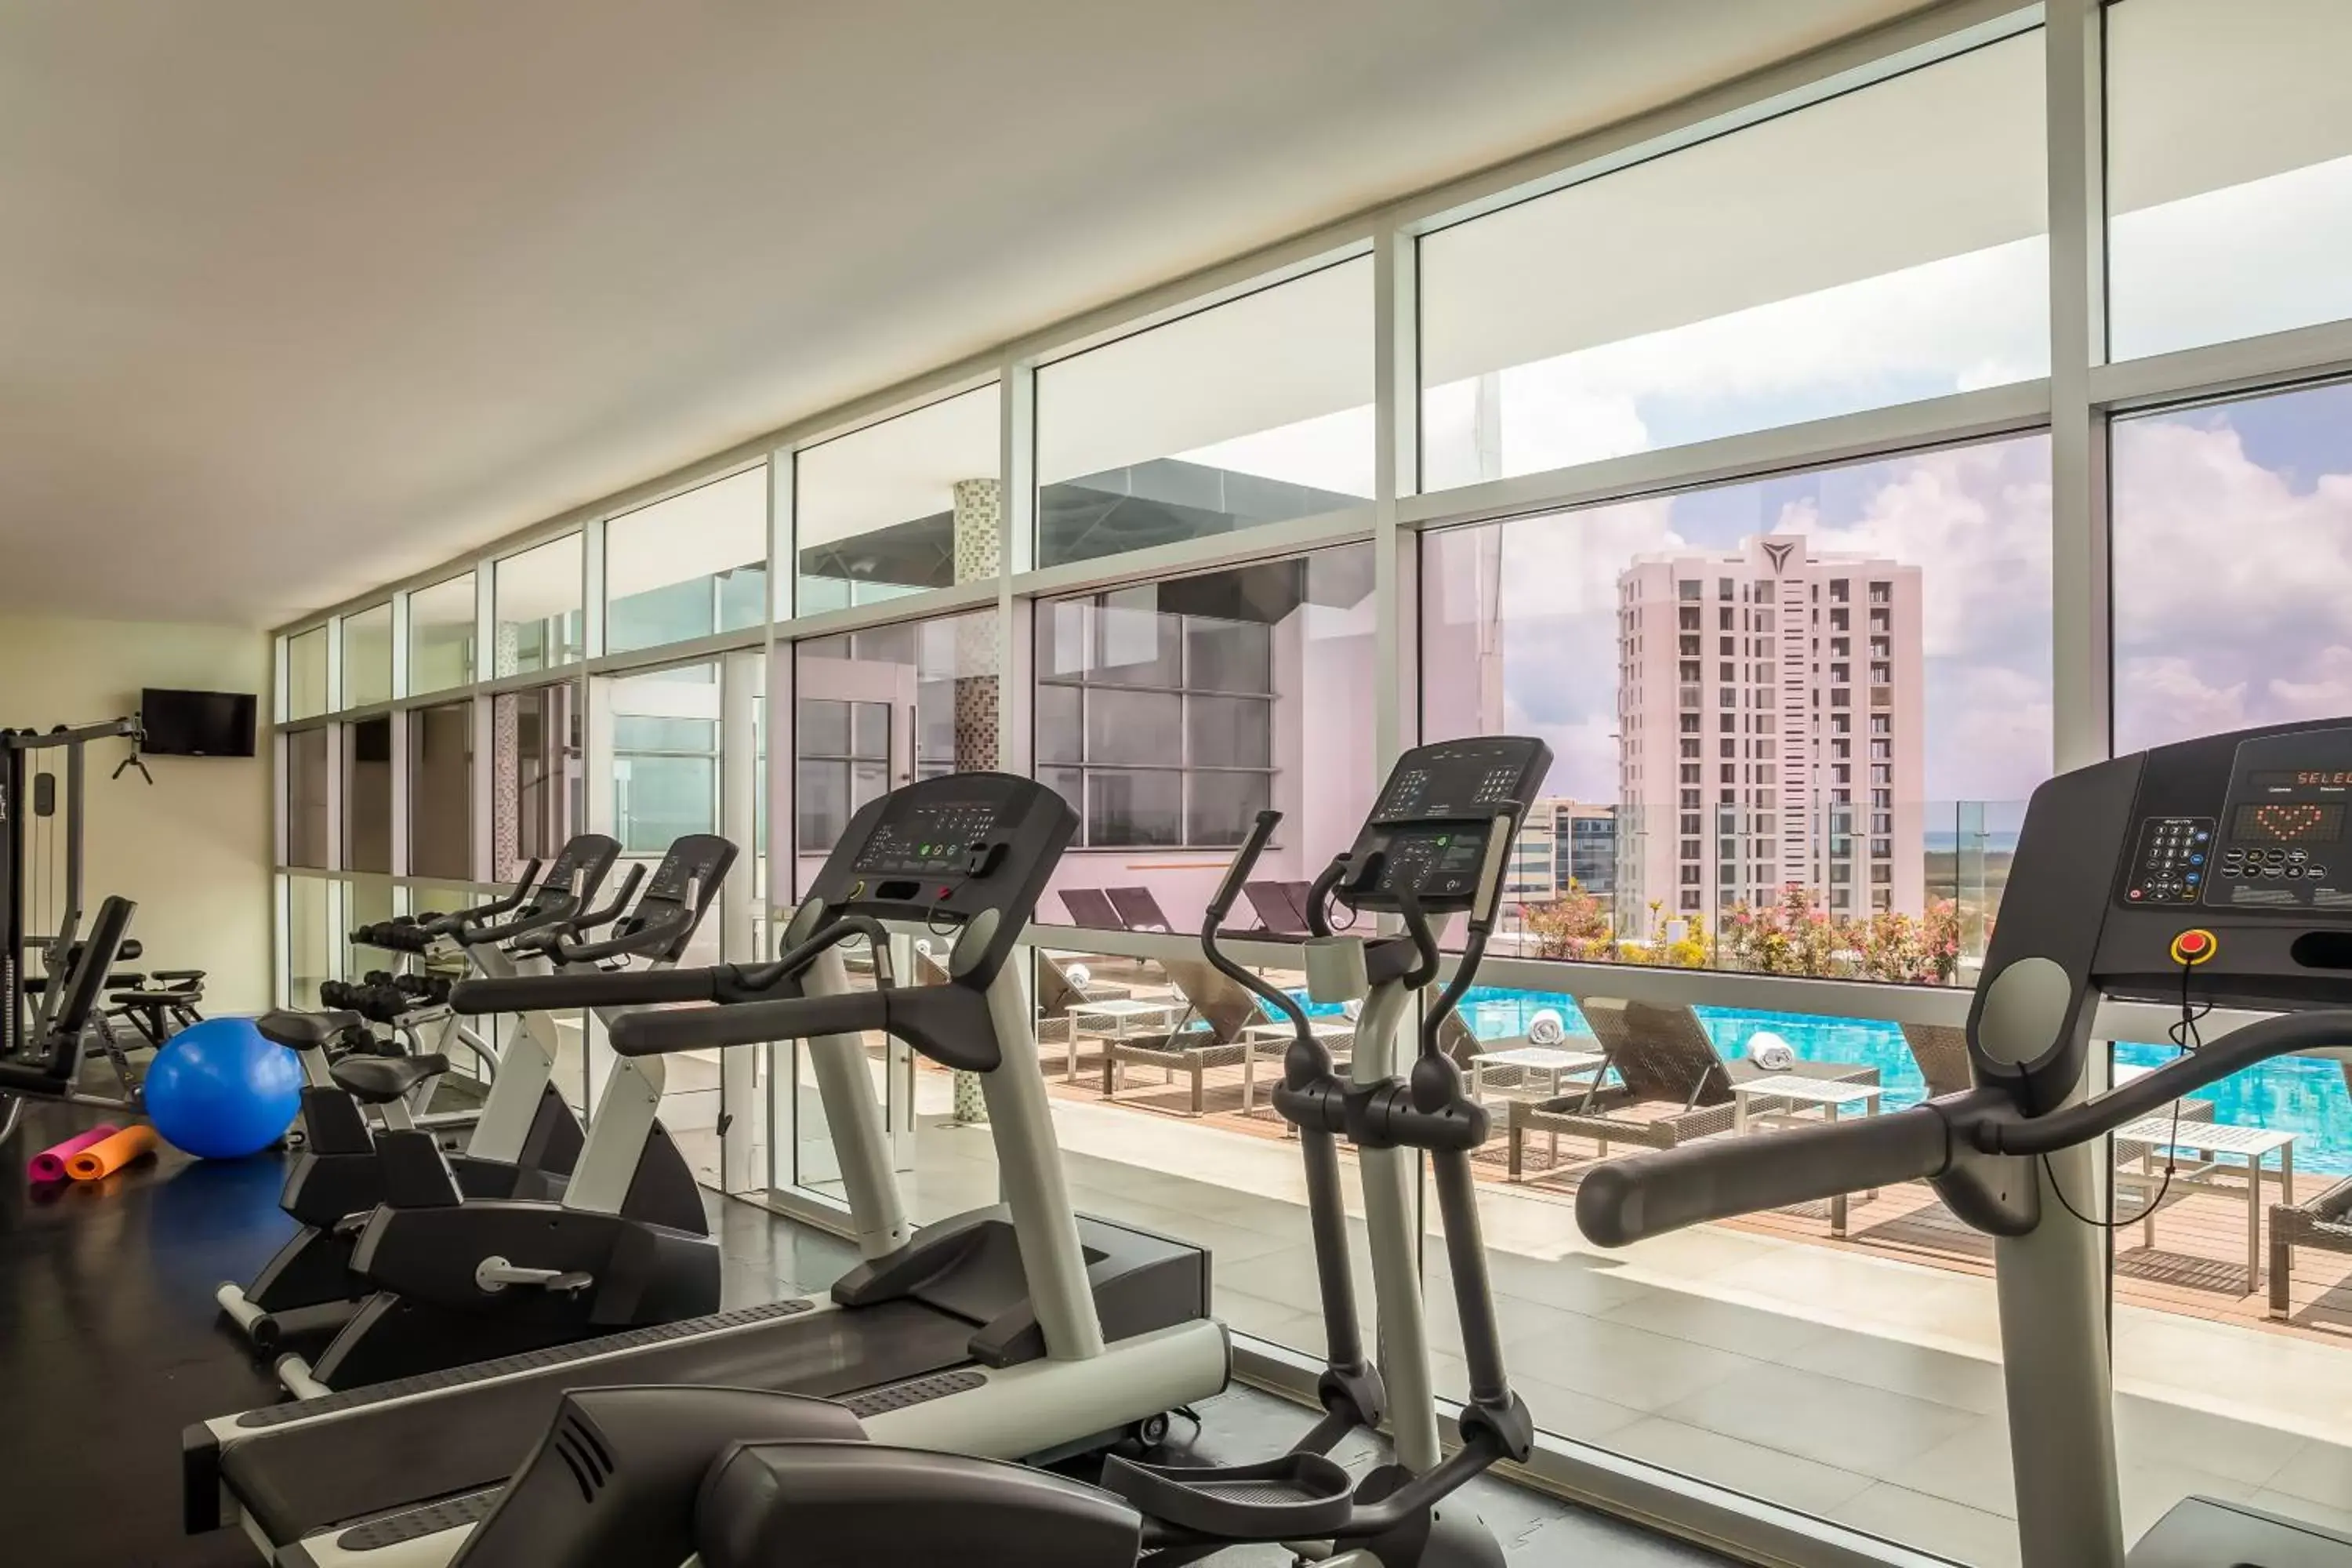 Fitness centre/facilities, Fitness Center/Facilities in Fiesta Inn Cancun Las Americas